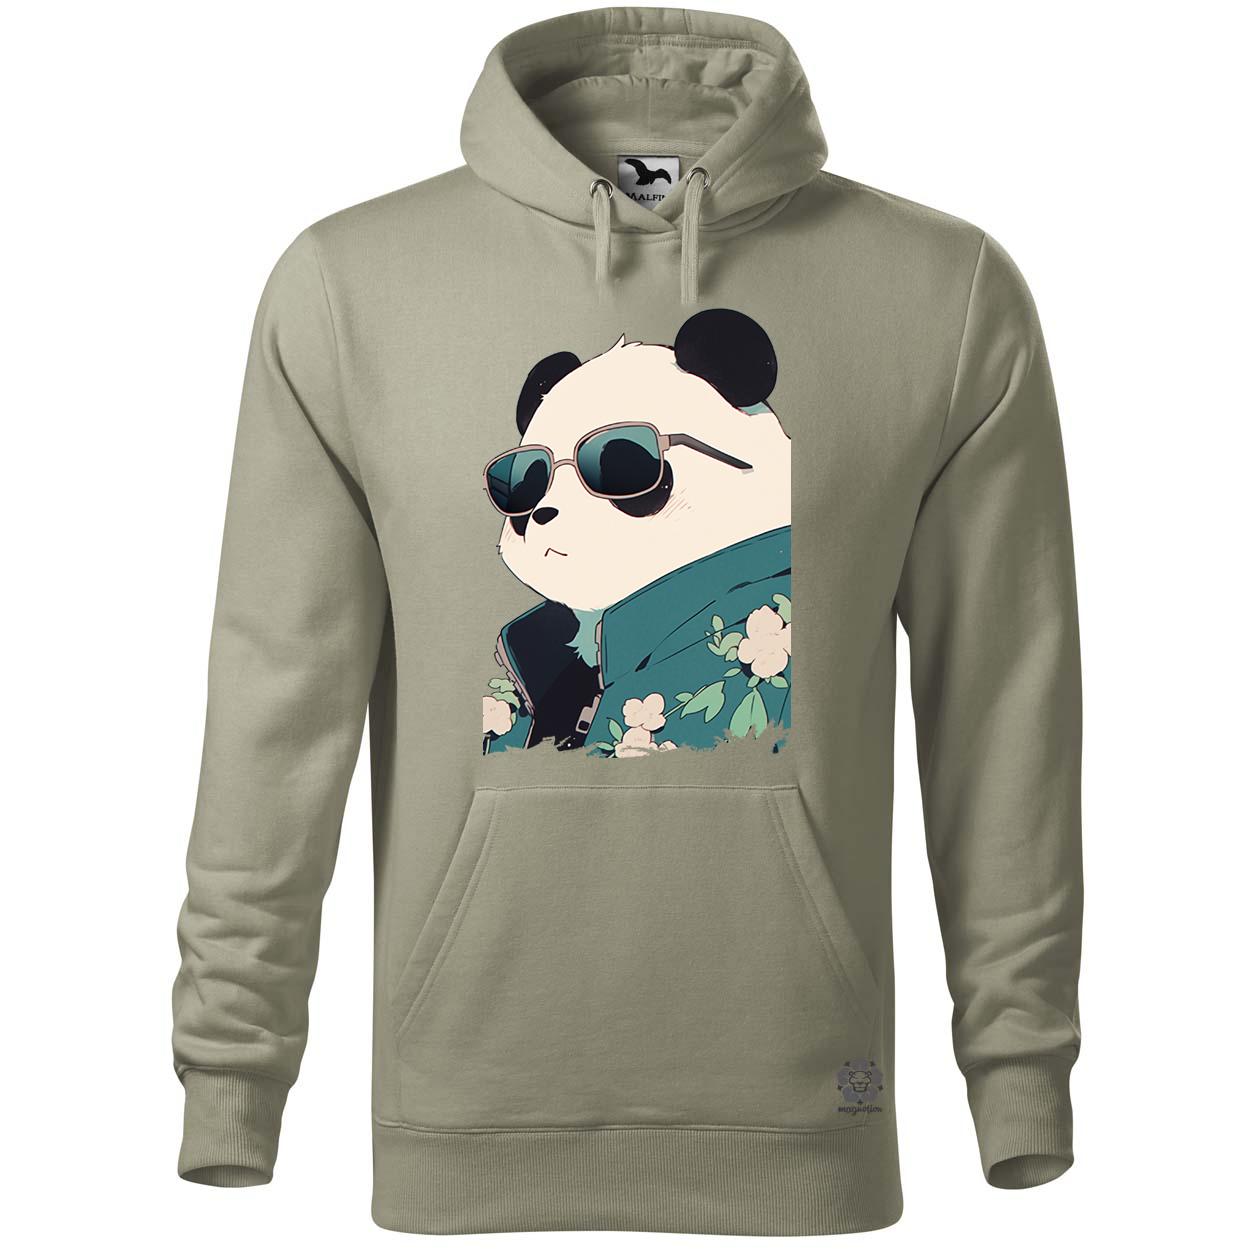 Laza napszemcsis panda v2